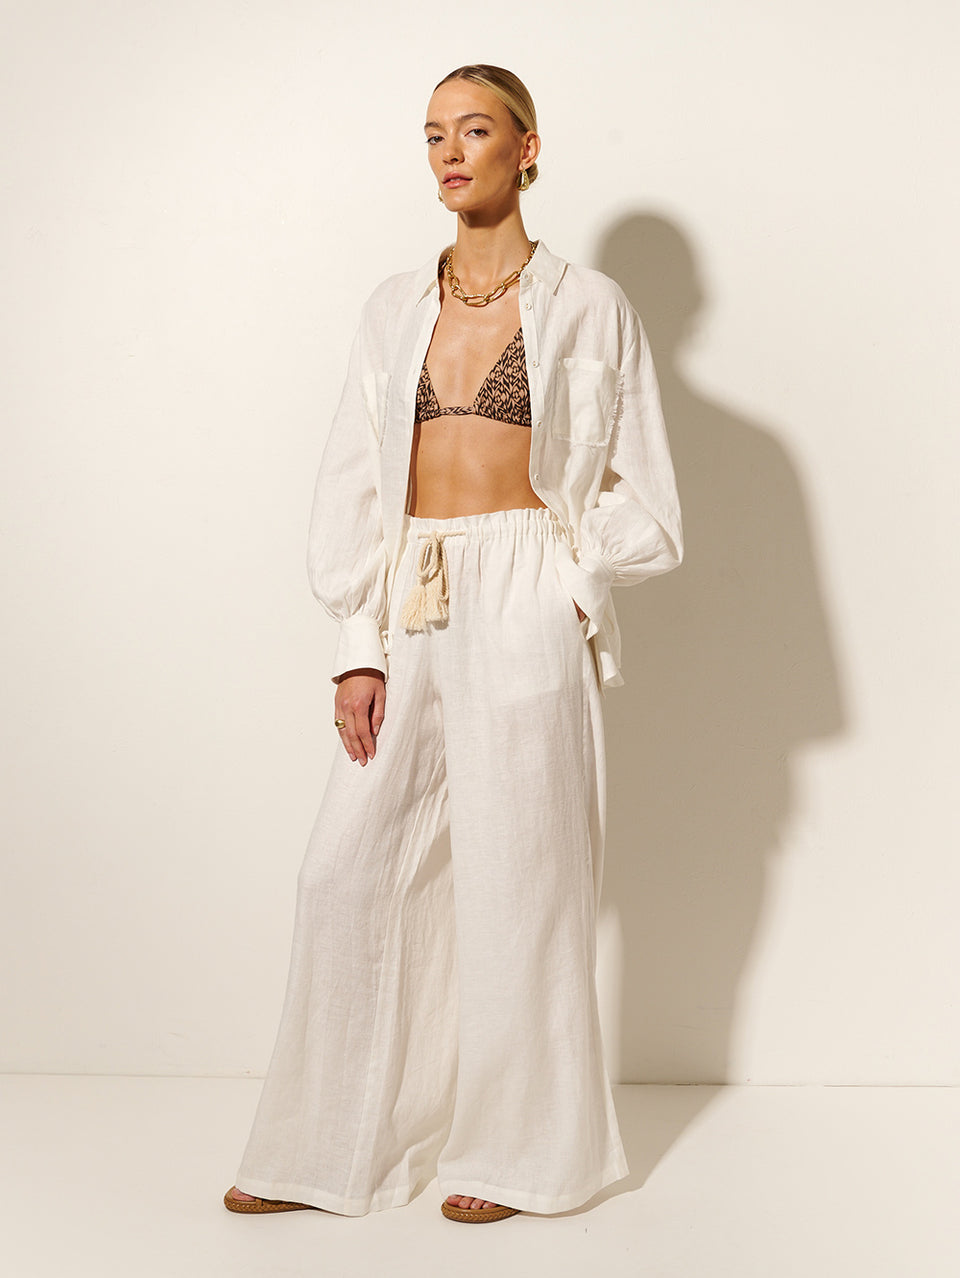 Jacana Pant KIVARI | Model wears ivory linen pant side view